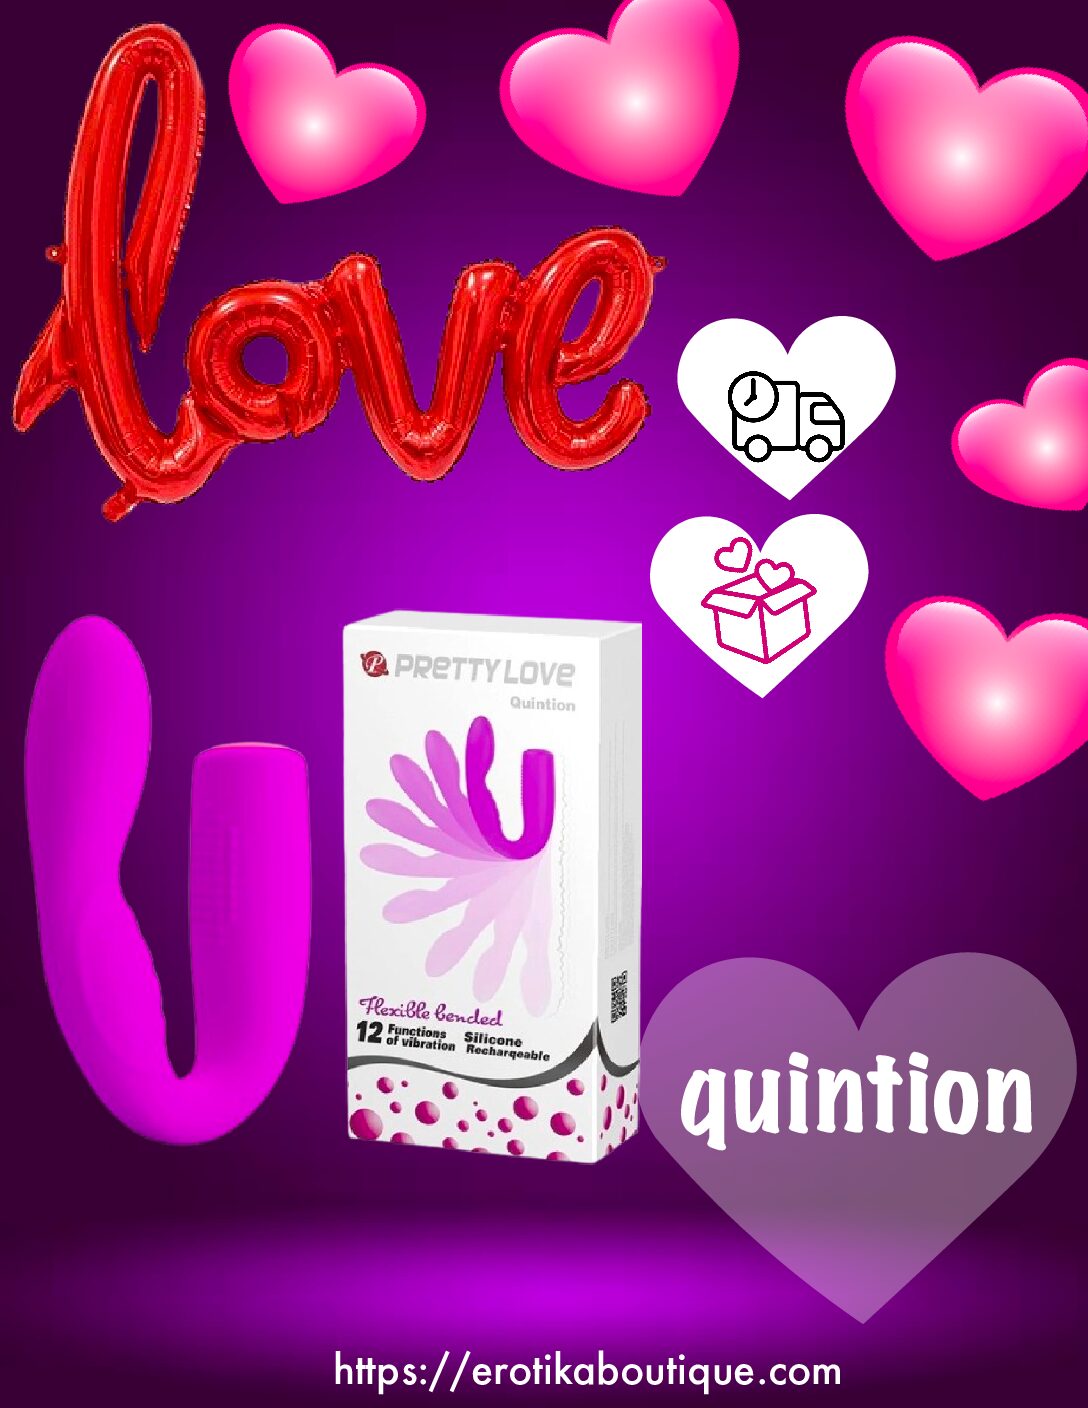 pretty love quintion